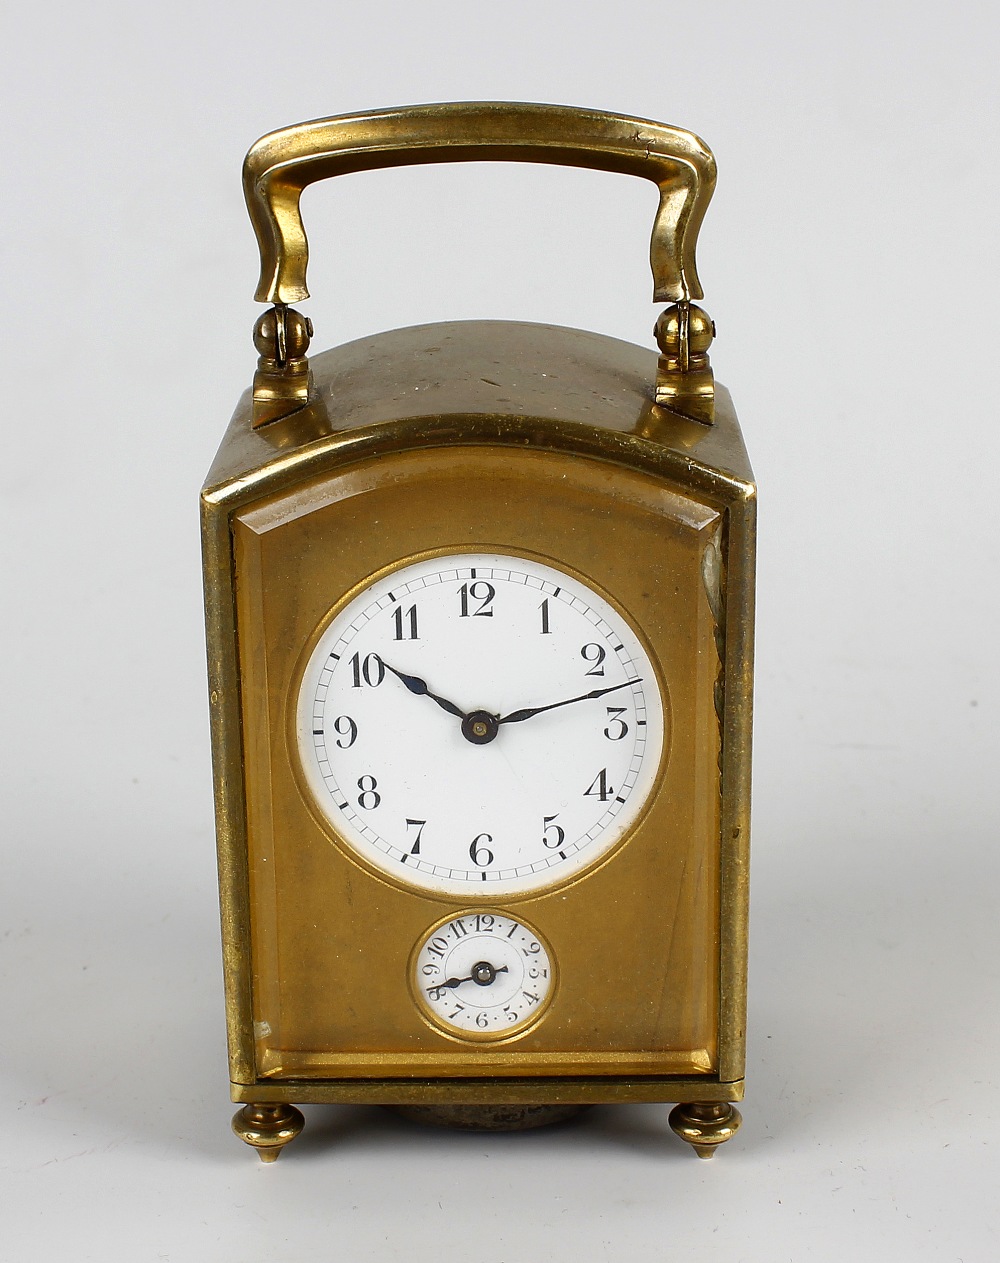 A good mid 19th century miniature carriage or travel clock with alarm Paul Garnier, Paris. The